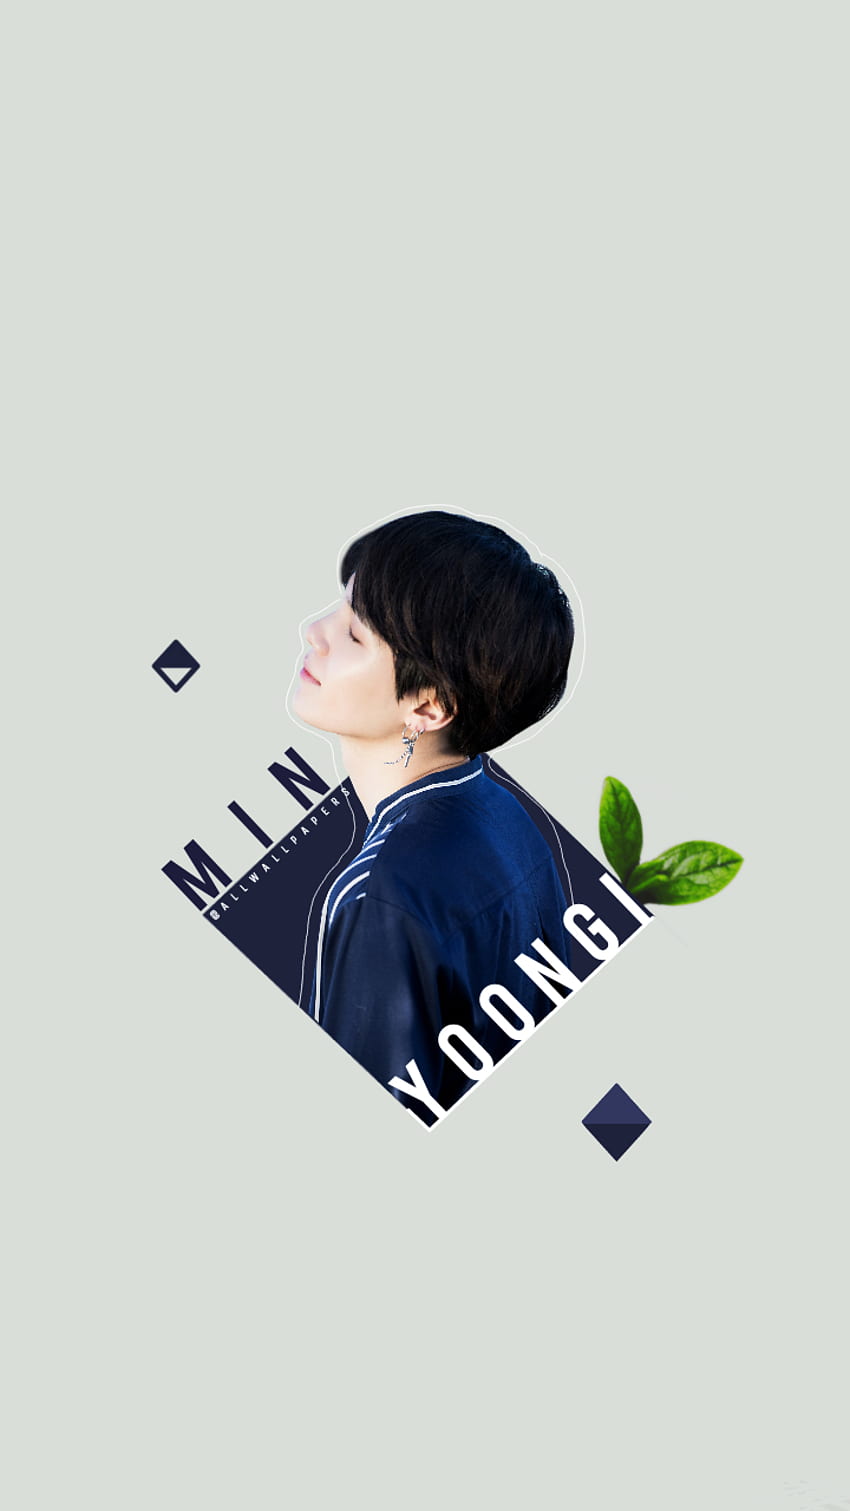 Suga BTS wallpaper 2020 Wallpaper for Suga BTS APK for Android Download